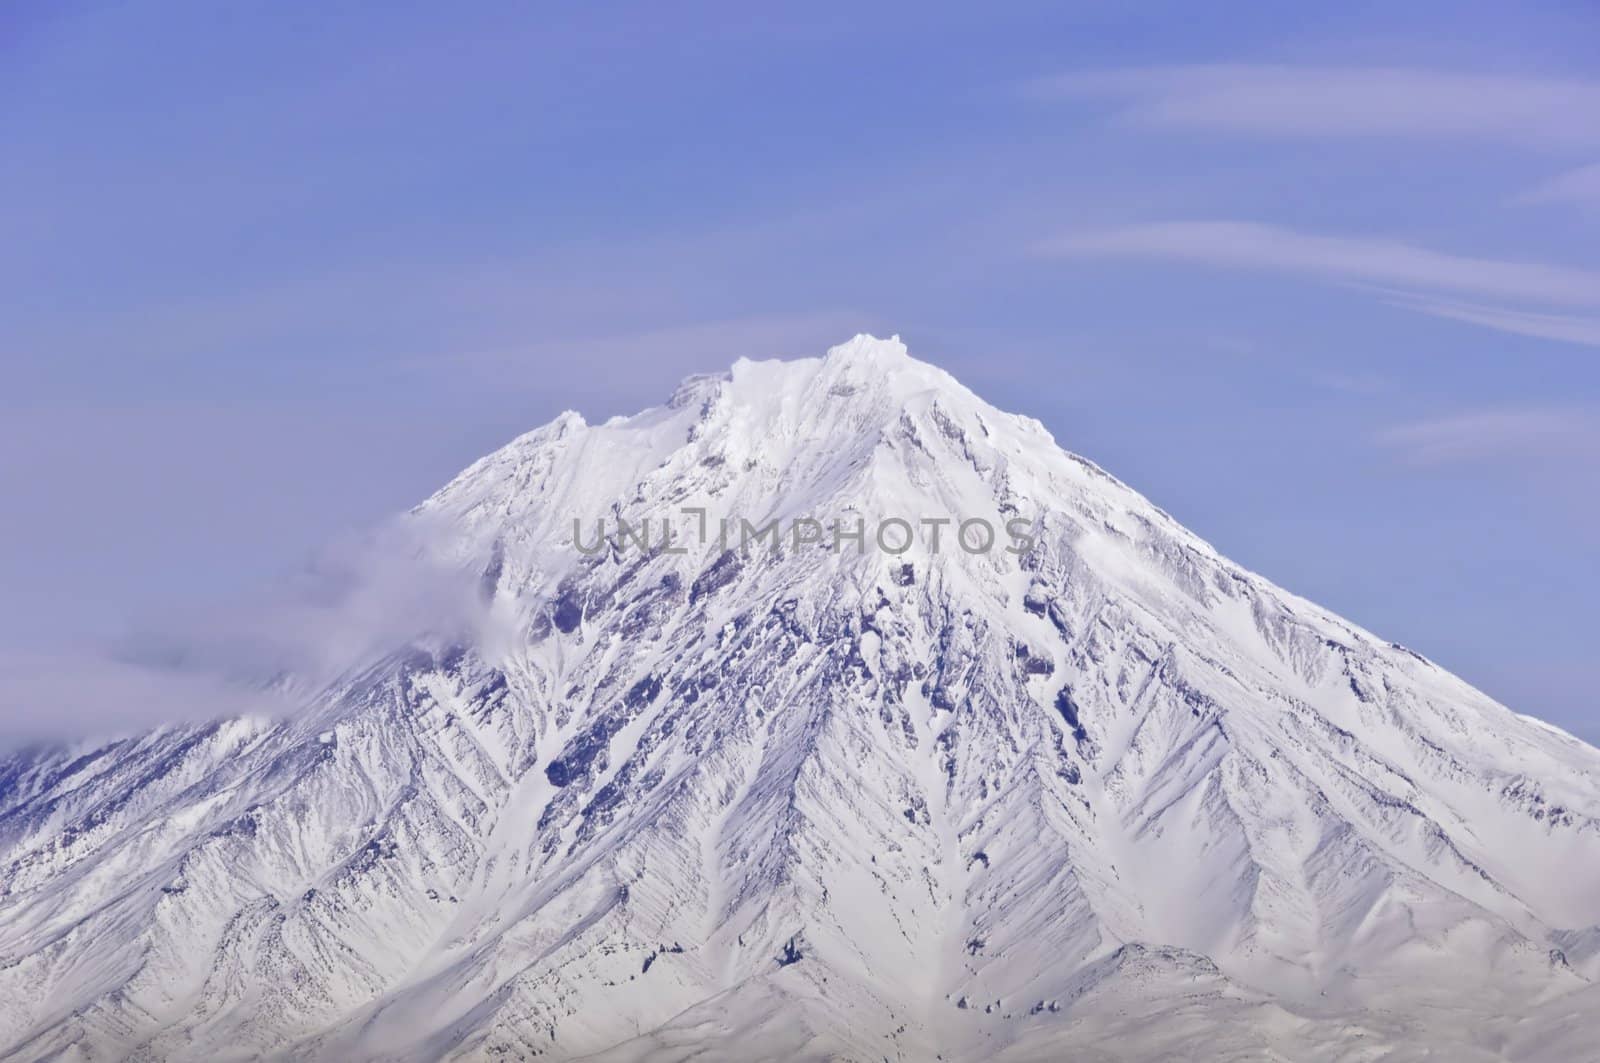 Big russian Volcano on Kamchatka in Russia